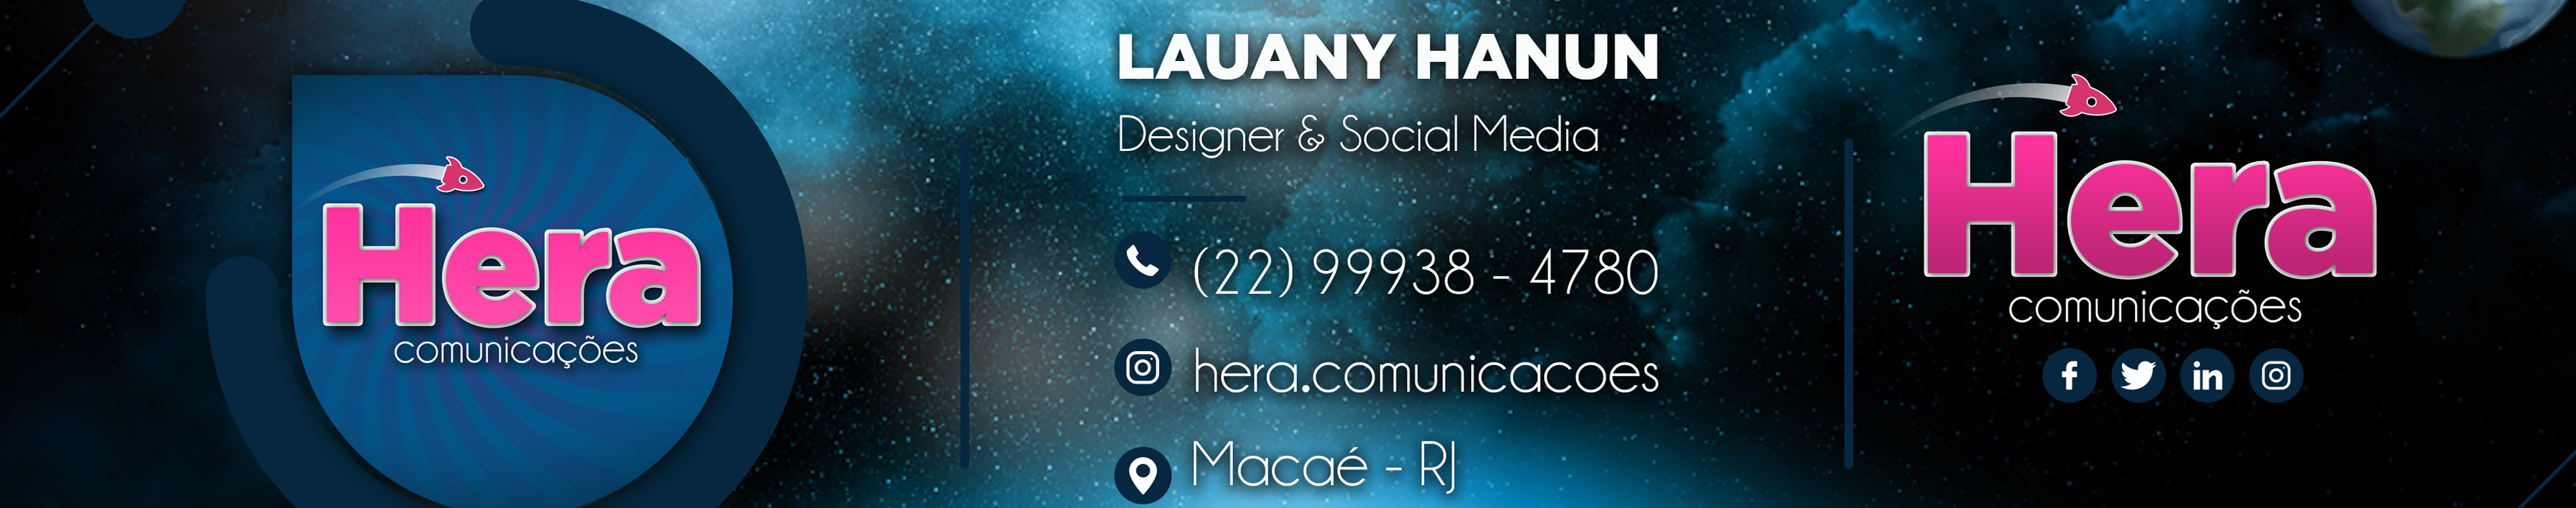 Lauany Hanun's profile banner